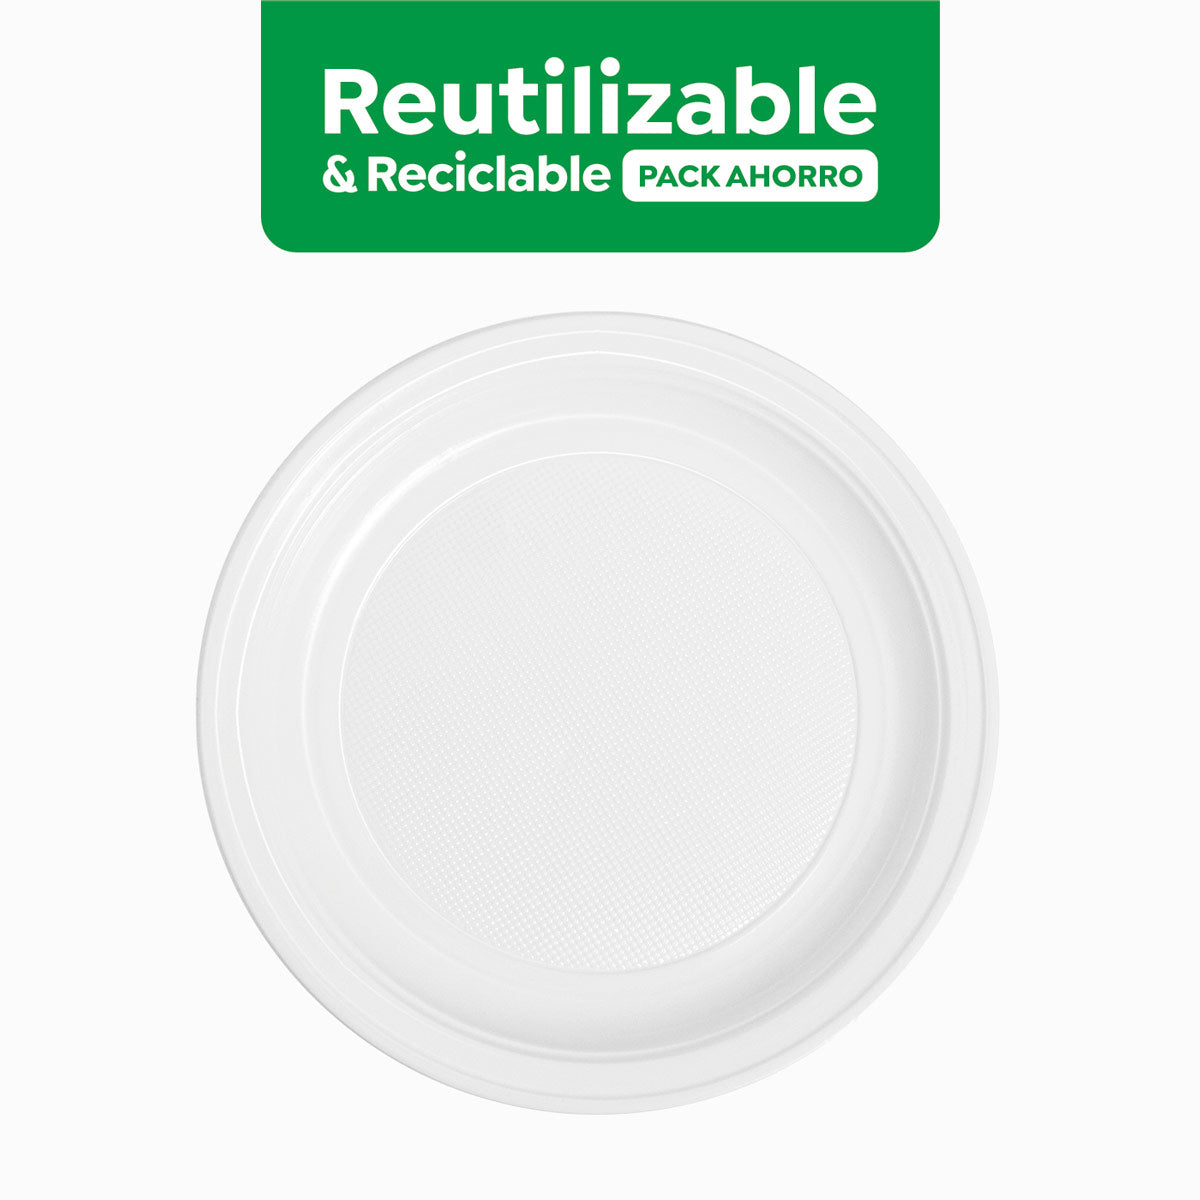 Sobremesa de prato de plástico redondo Ø 17 cm branco